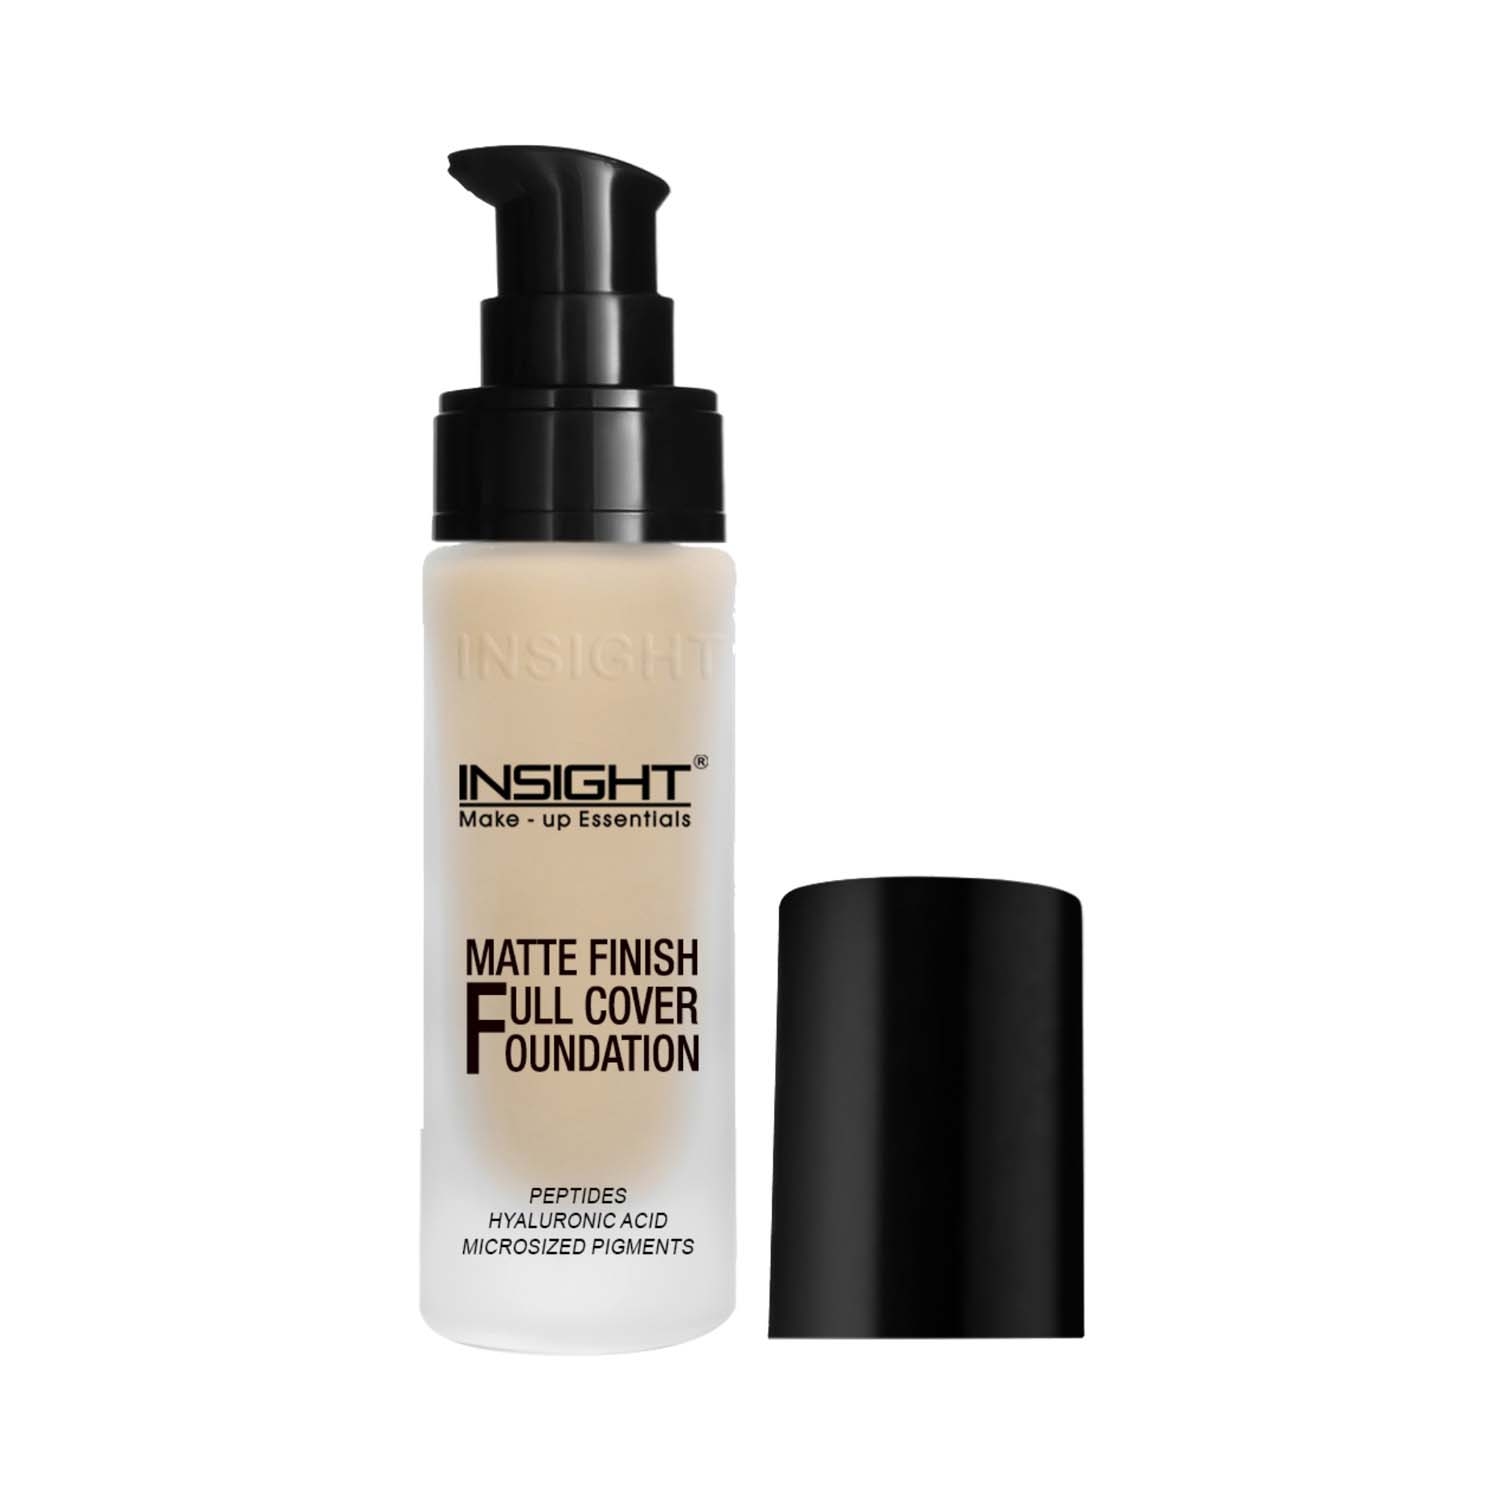 Insight Cosmetics | Insight Cosmetics Matte Finish Full Cover Foundation - LN10 (30ml)